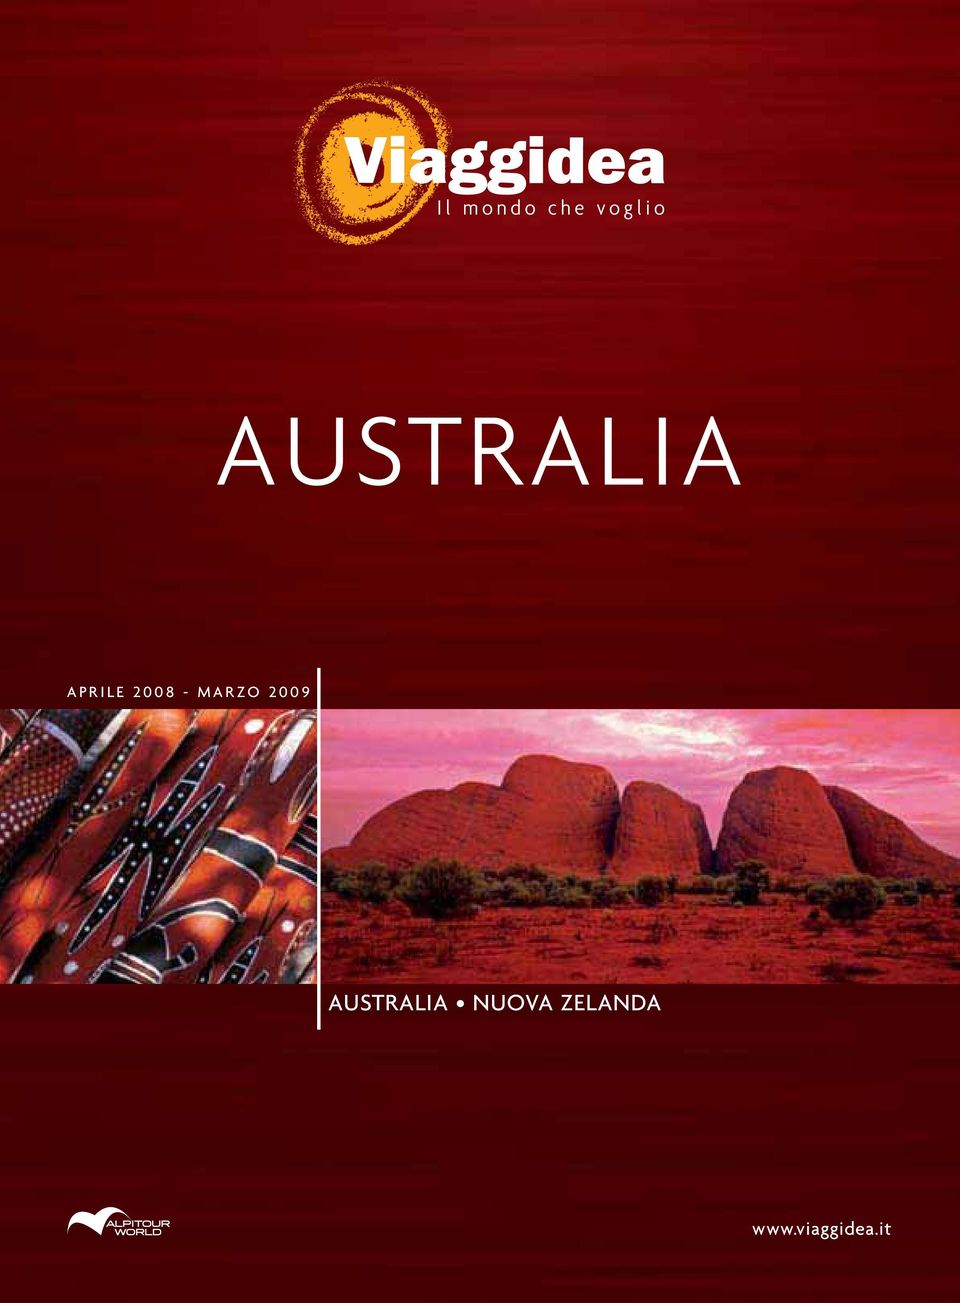 AUSTRALIA NUOVA